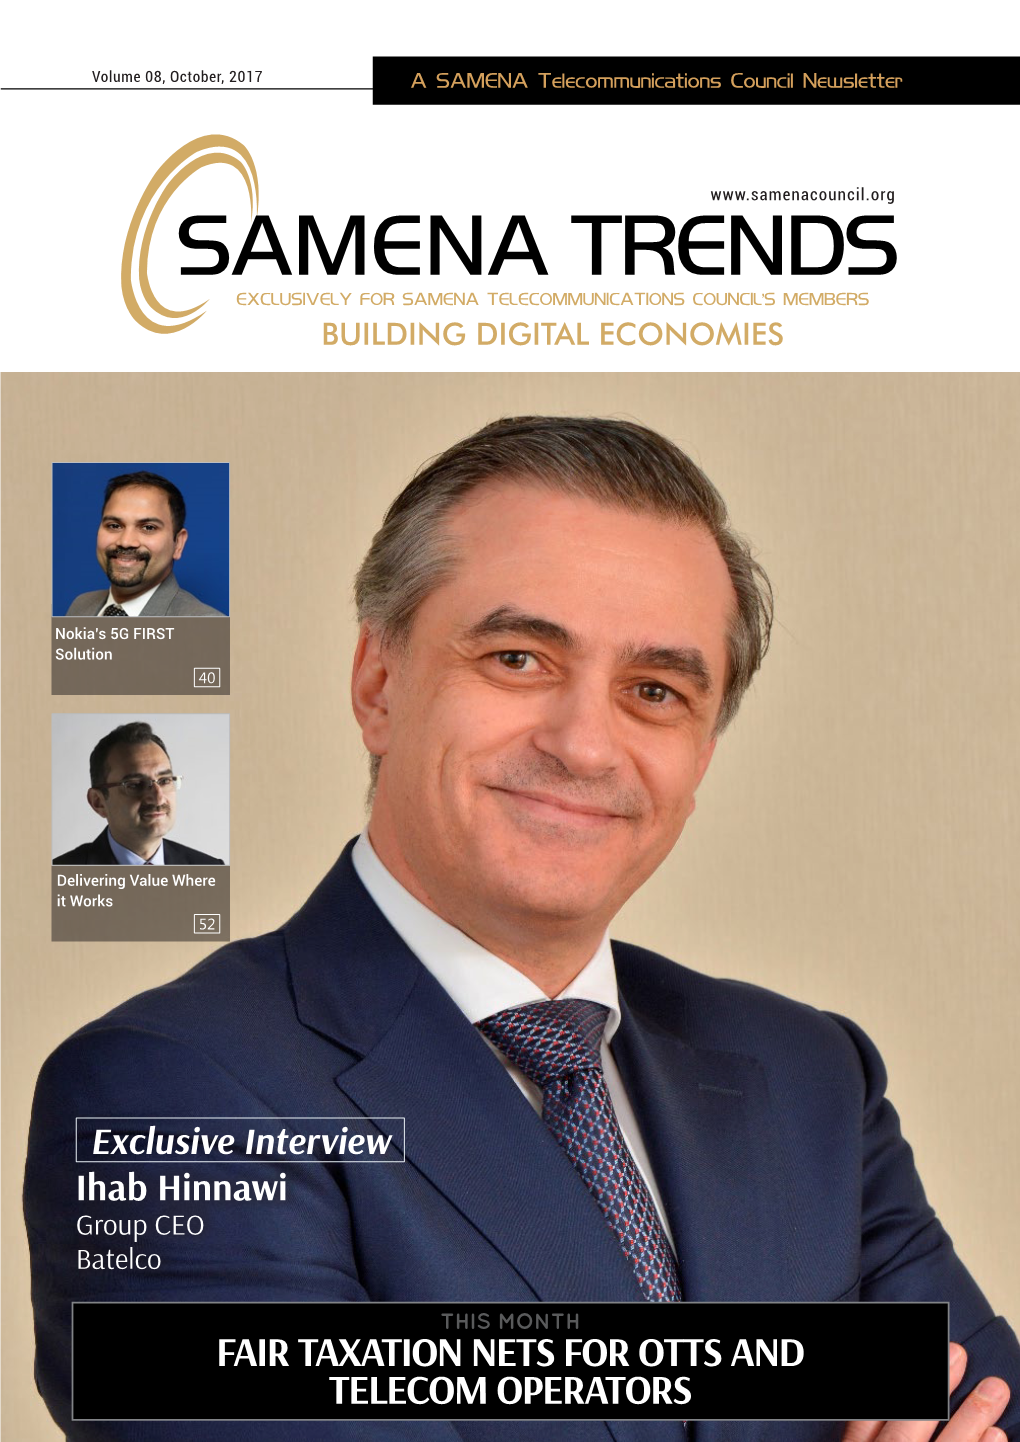 Samena Trends Exclusively for Samena Telecommunications Council's Members Building Digital Economies